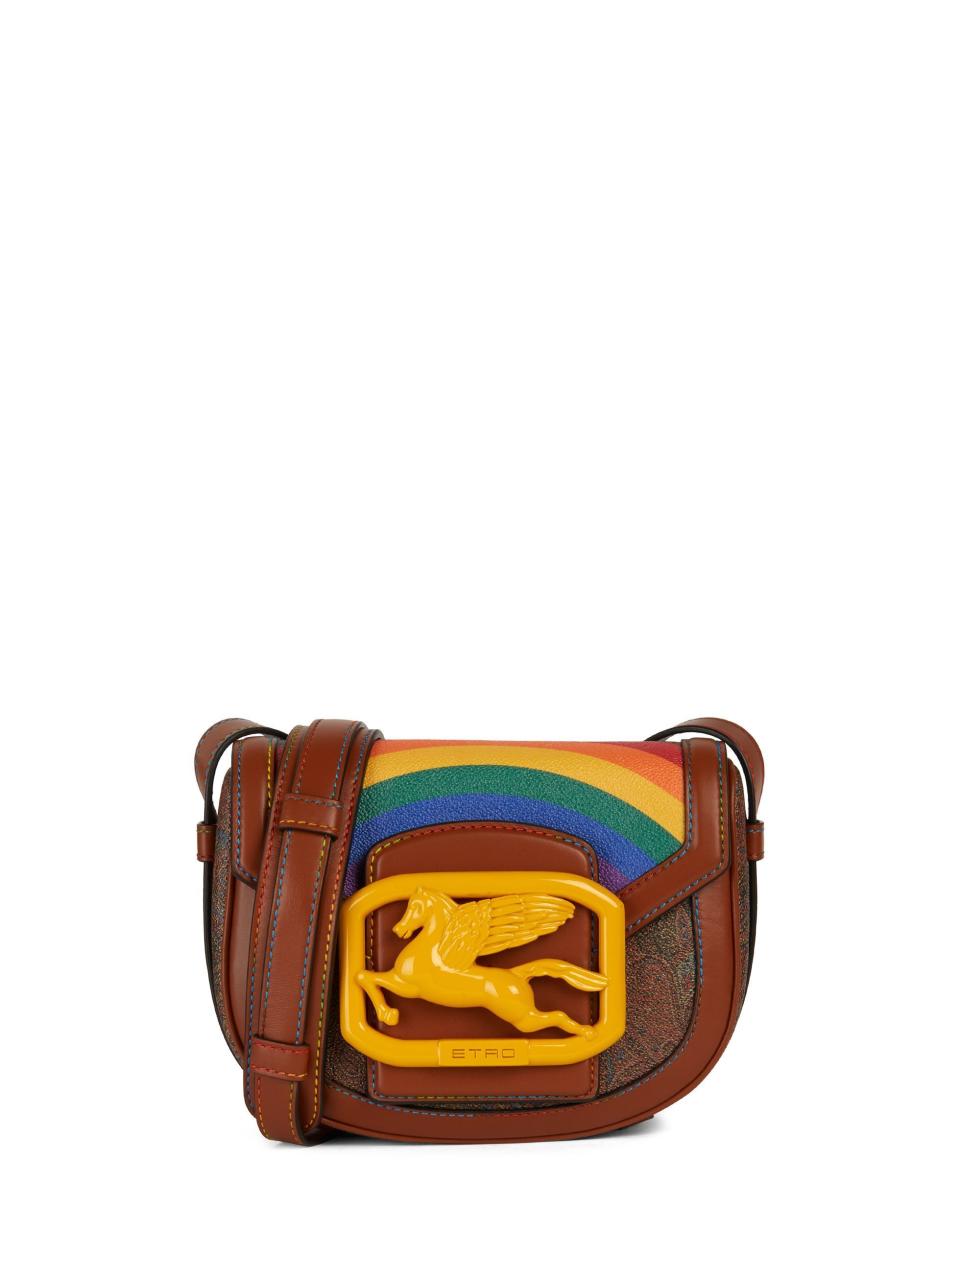 3) Pegaso Pride Bag